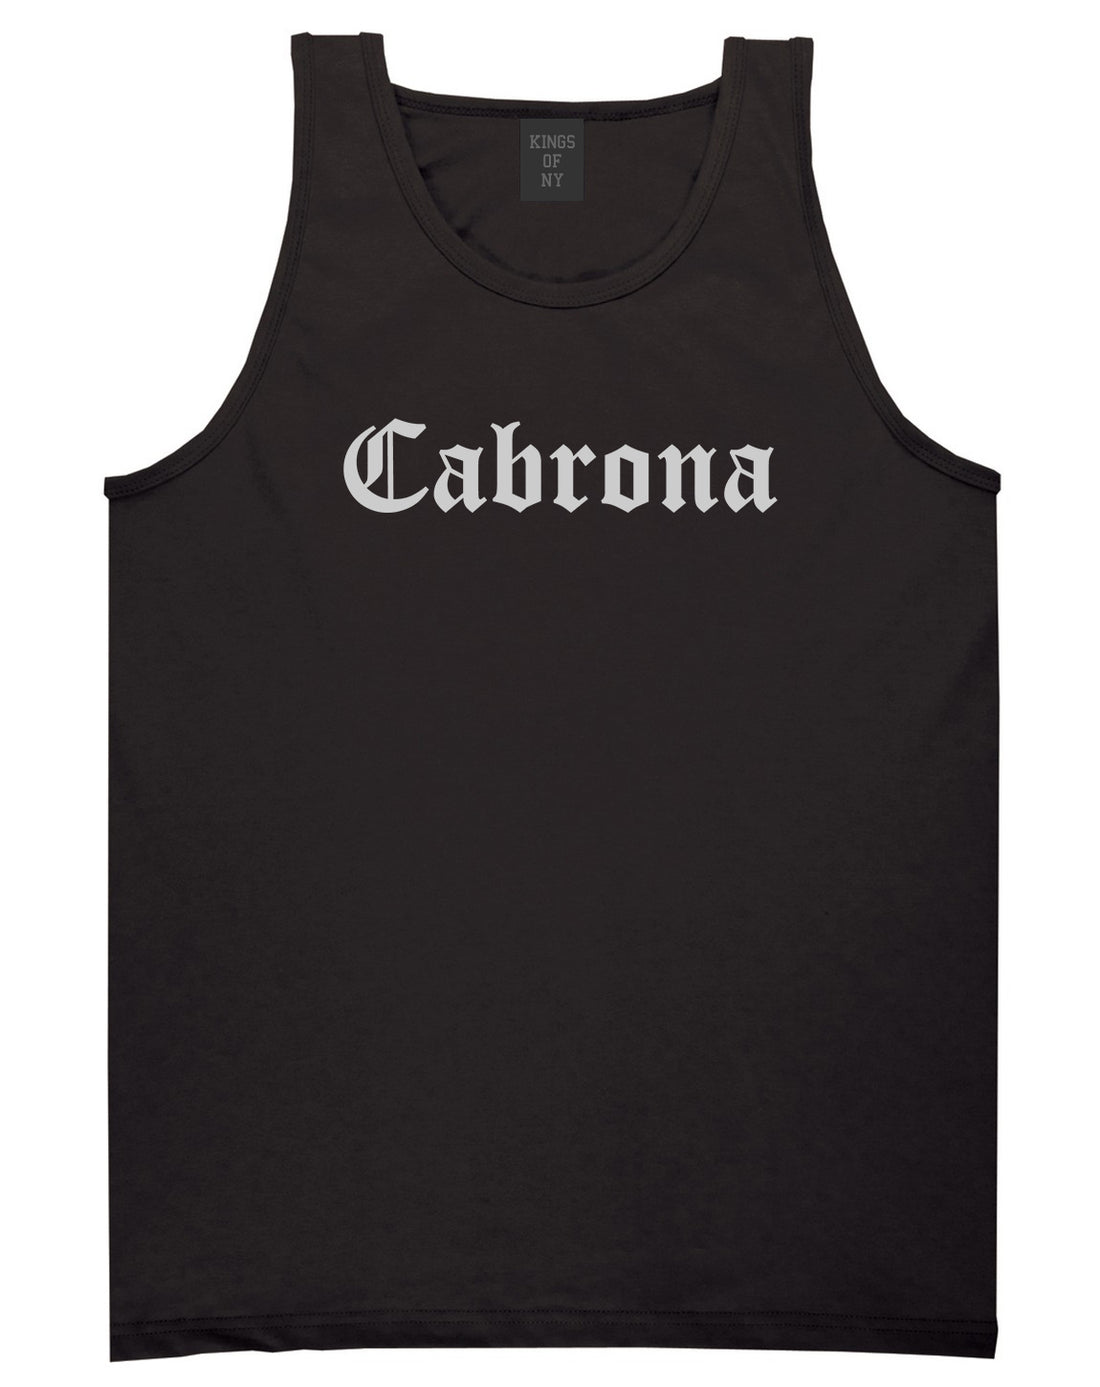 Cabrona Spanish Mens Tank Top Shirt Black